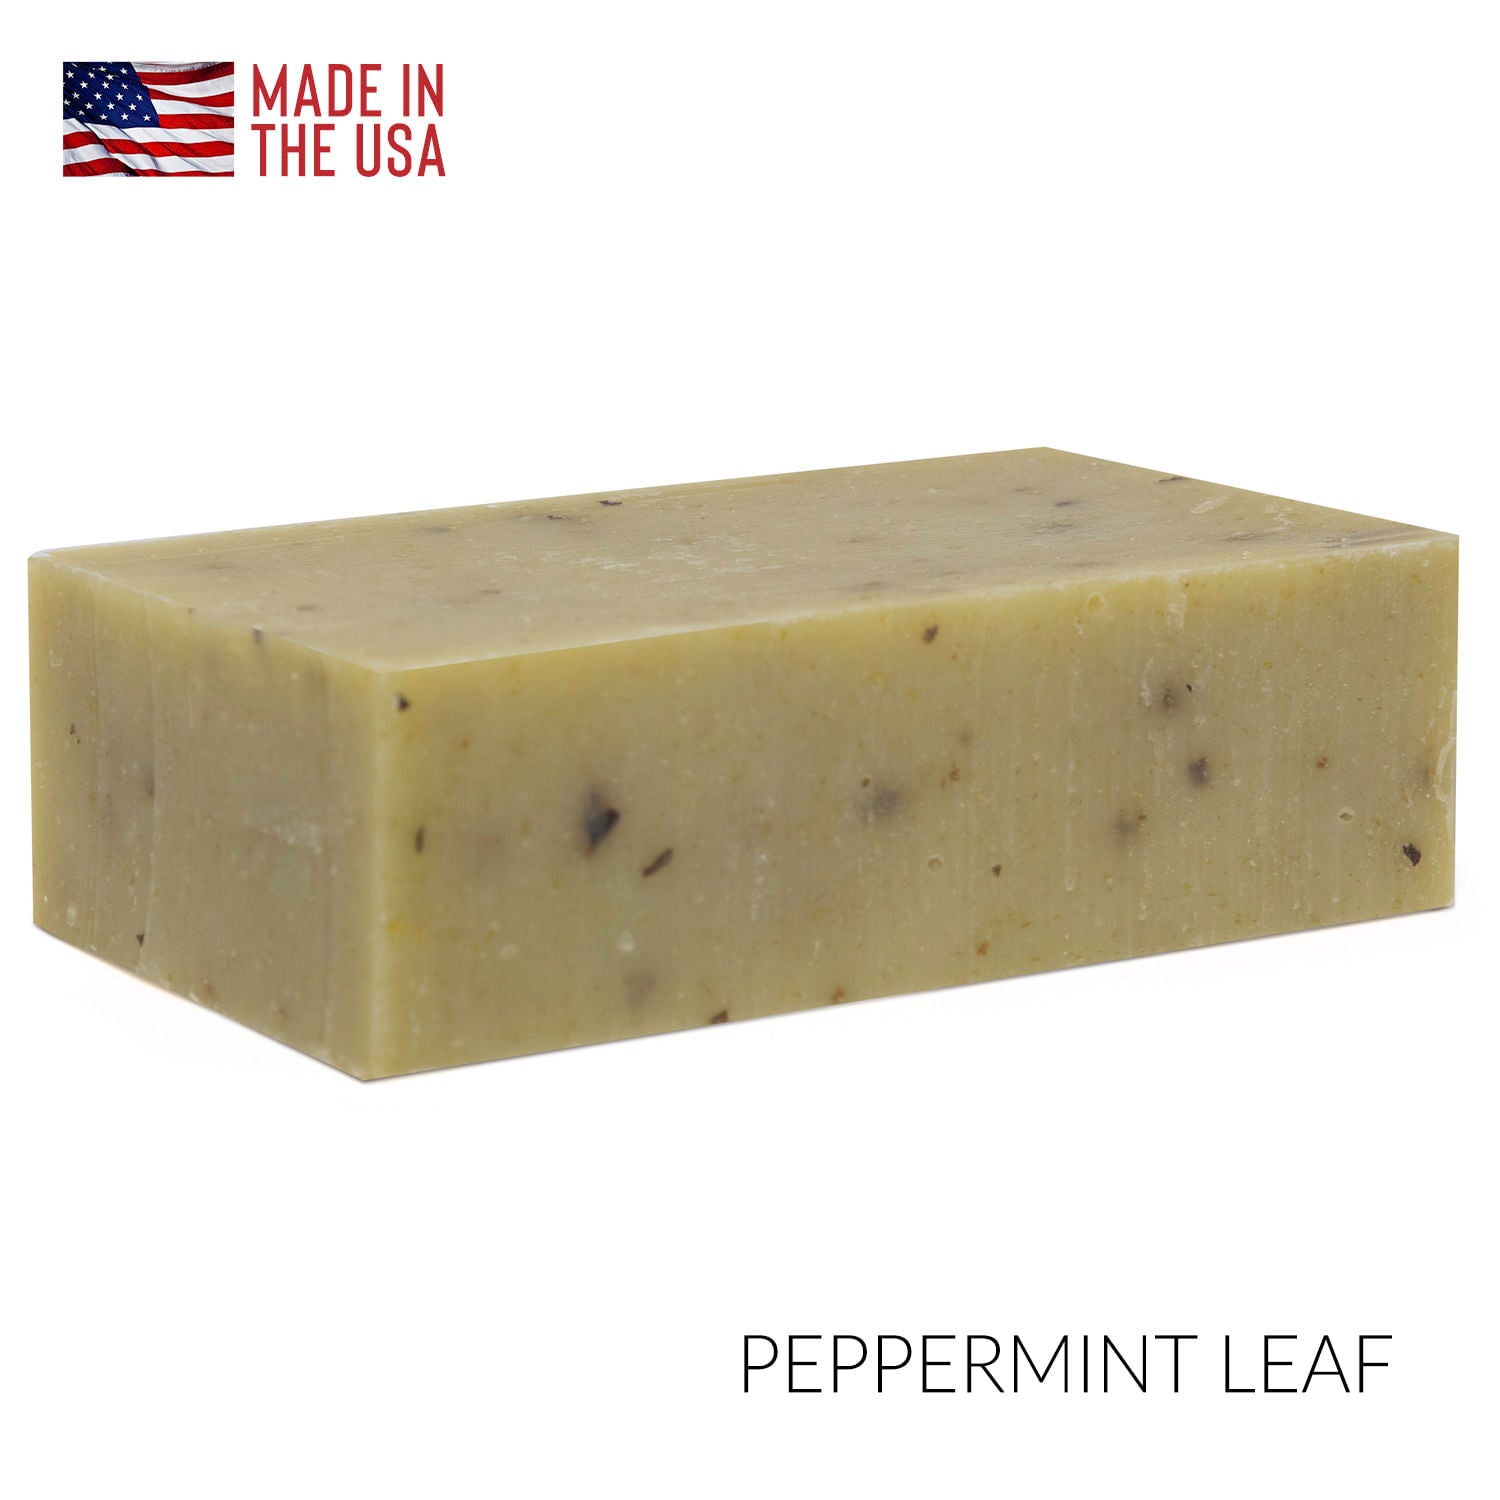 Peppermint leaf bar soap.